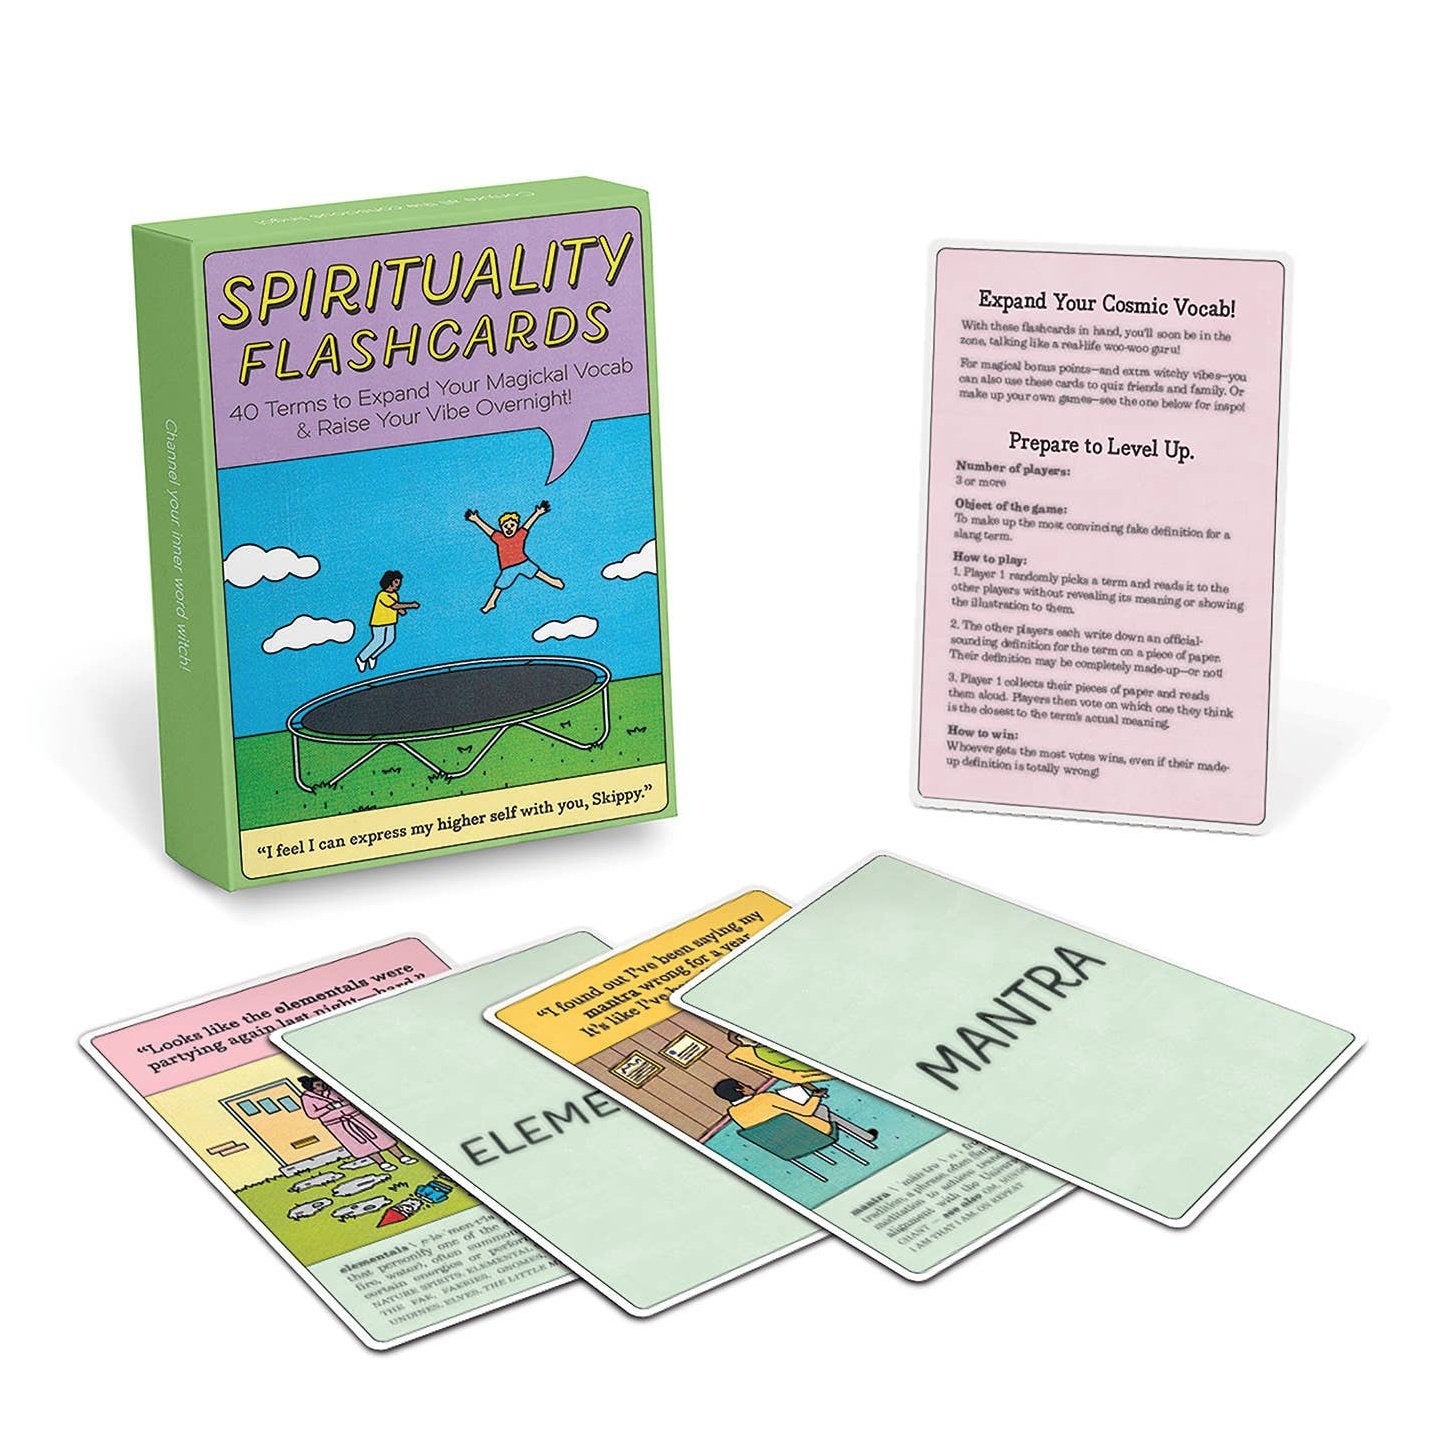 Spirituality Flashcards Deck, 36 Cards